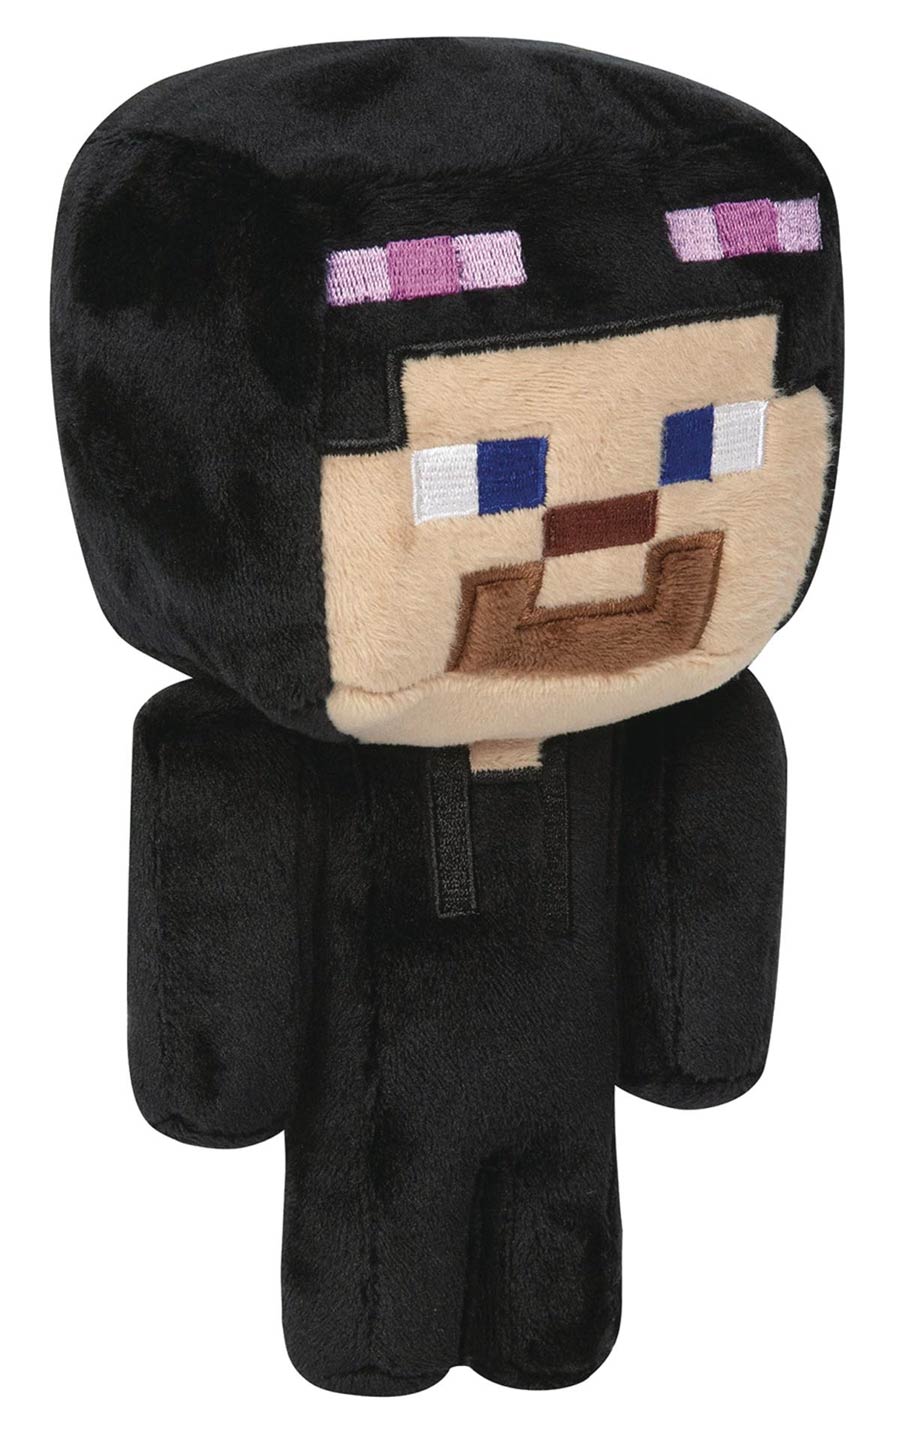 Minecraft Steve In Enderman Costume 7-Inch Plush